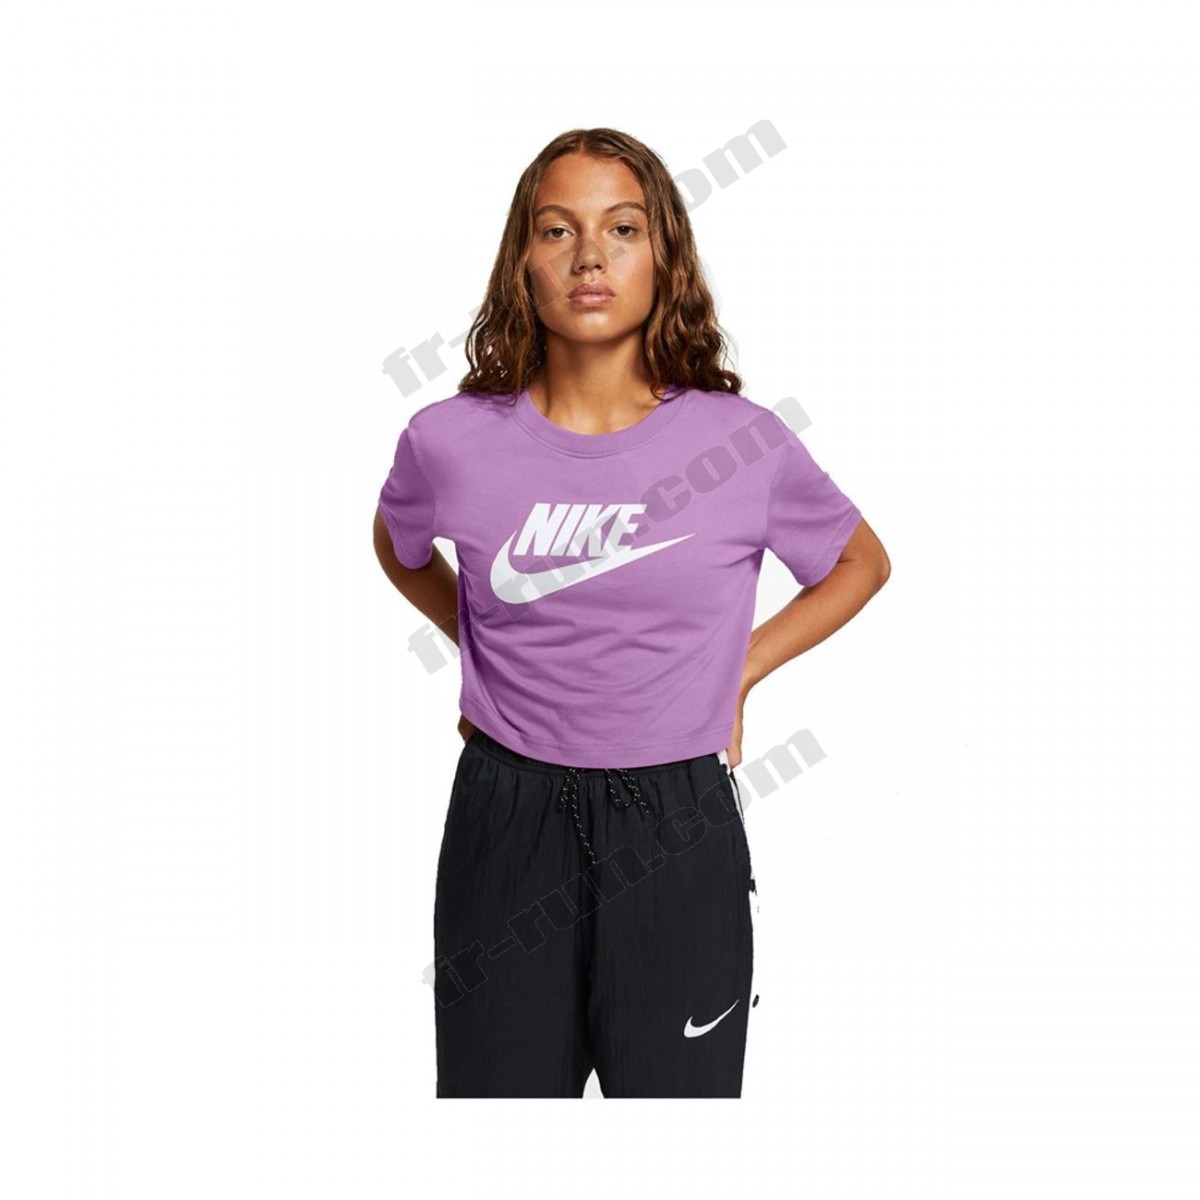 Nike/running femme NIKE Nike Wmns Essential ◇◇◇ Pas Cher Du Tout - Nike/running femme NIKE Nike Wmns Essential ◇◇◇ Pas Cher Du Tout